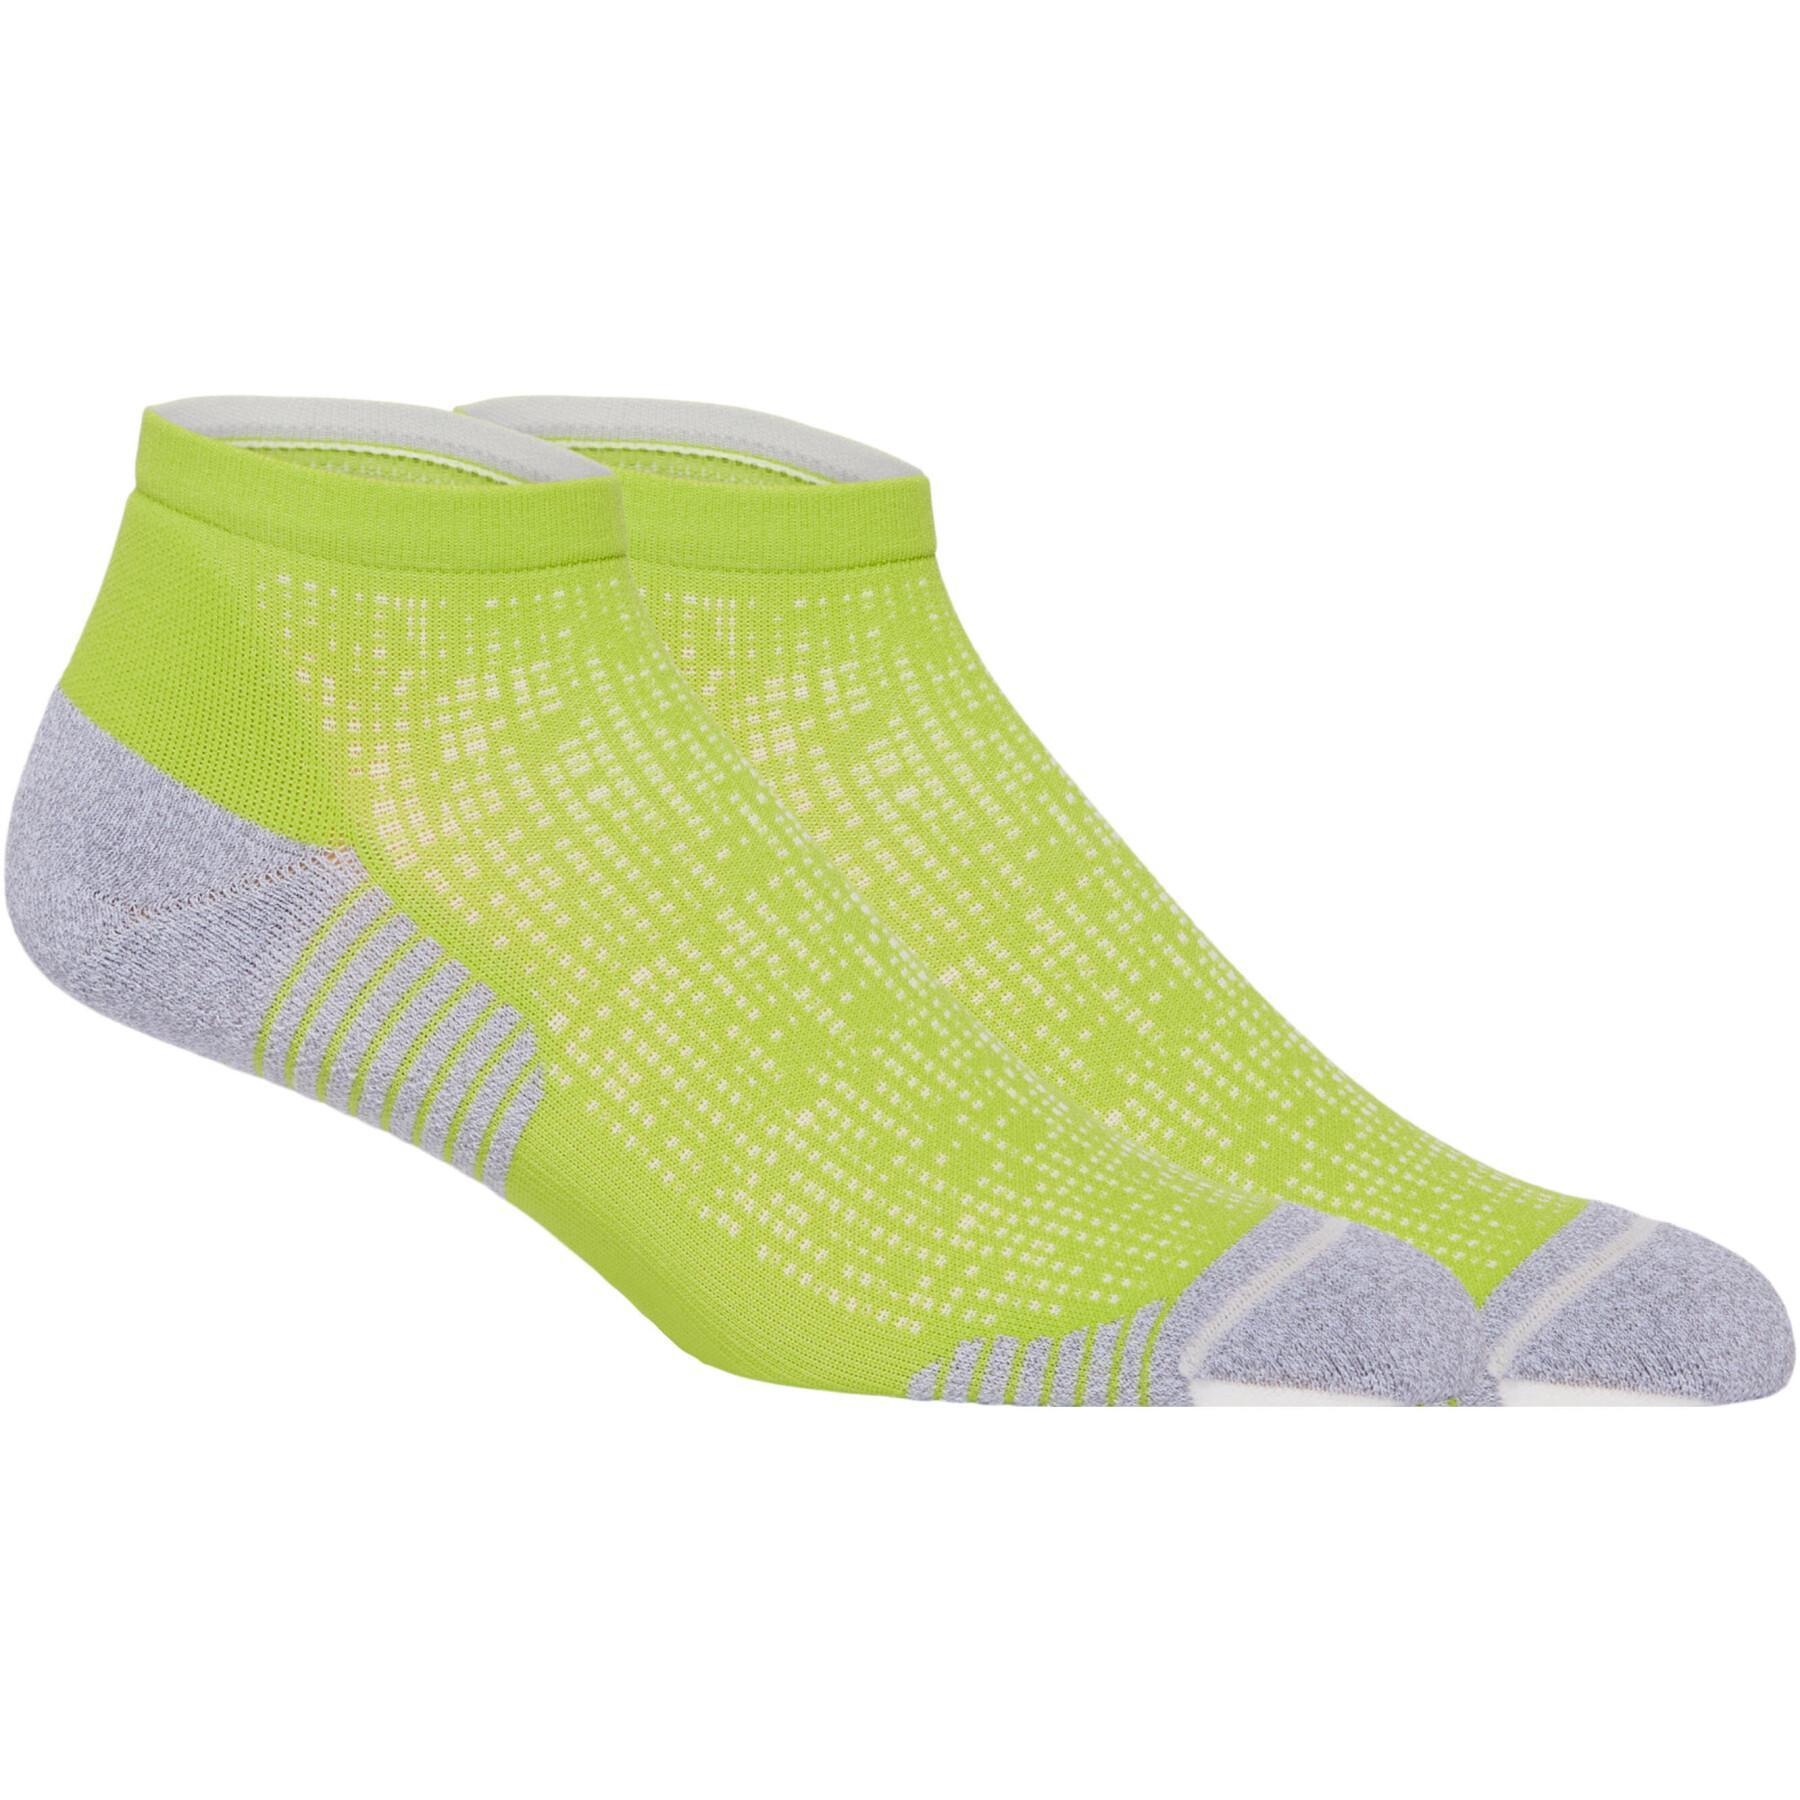 Socks from running Asics Sprintride Quarter